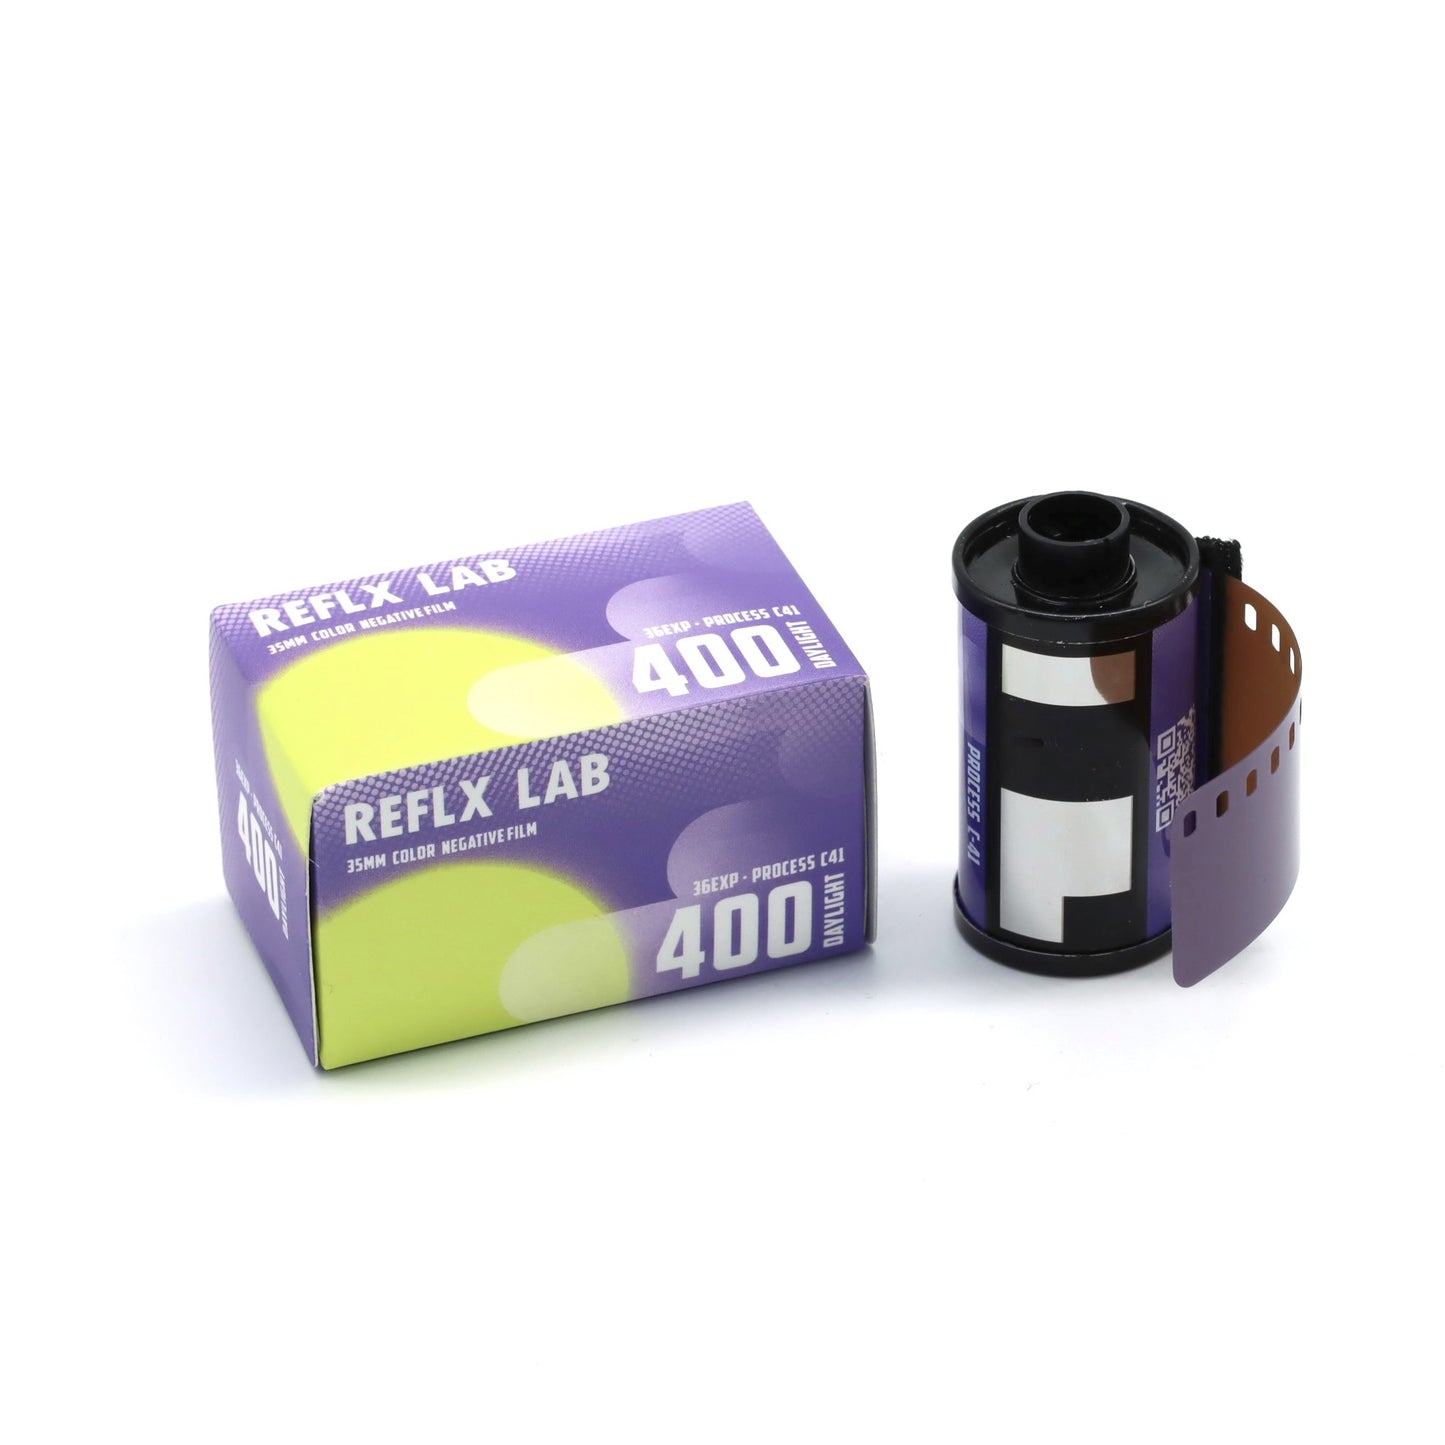 Reflx Lab 400 Daylight 35mm Color Negative Film 36EXP